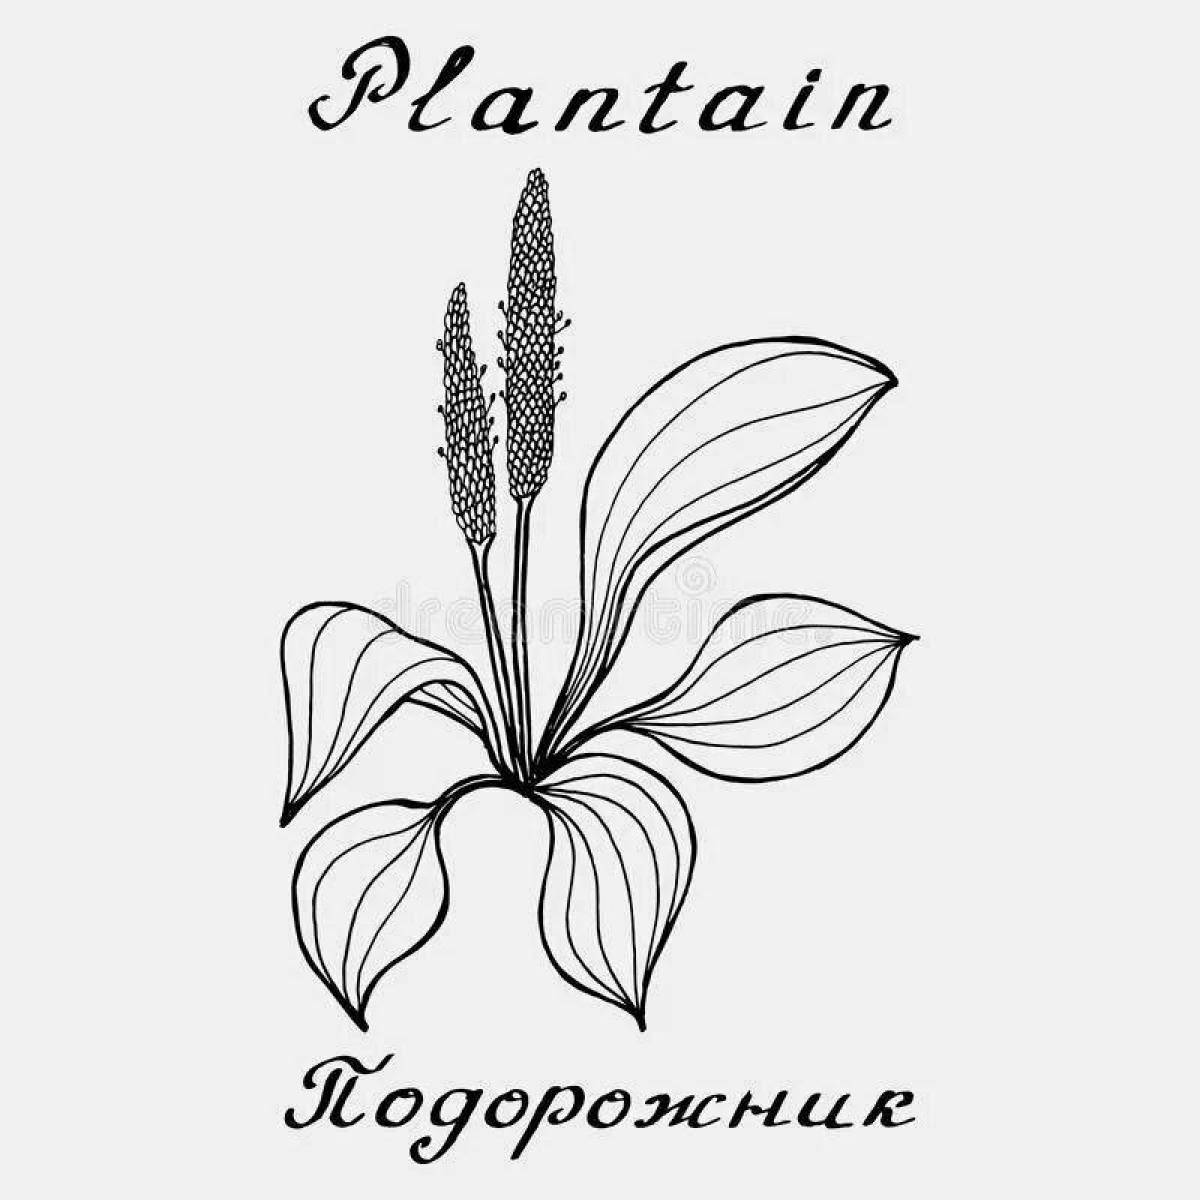 Plantain #12